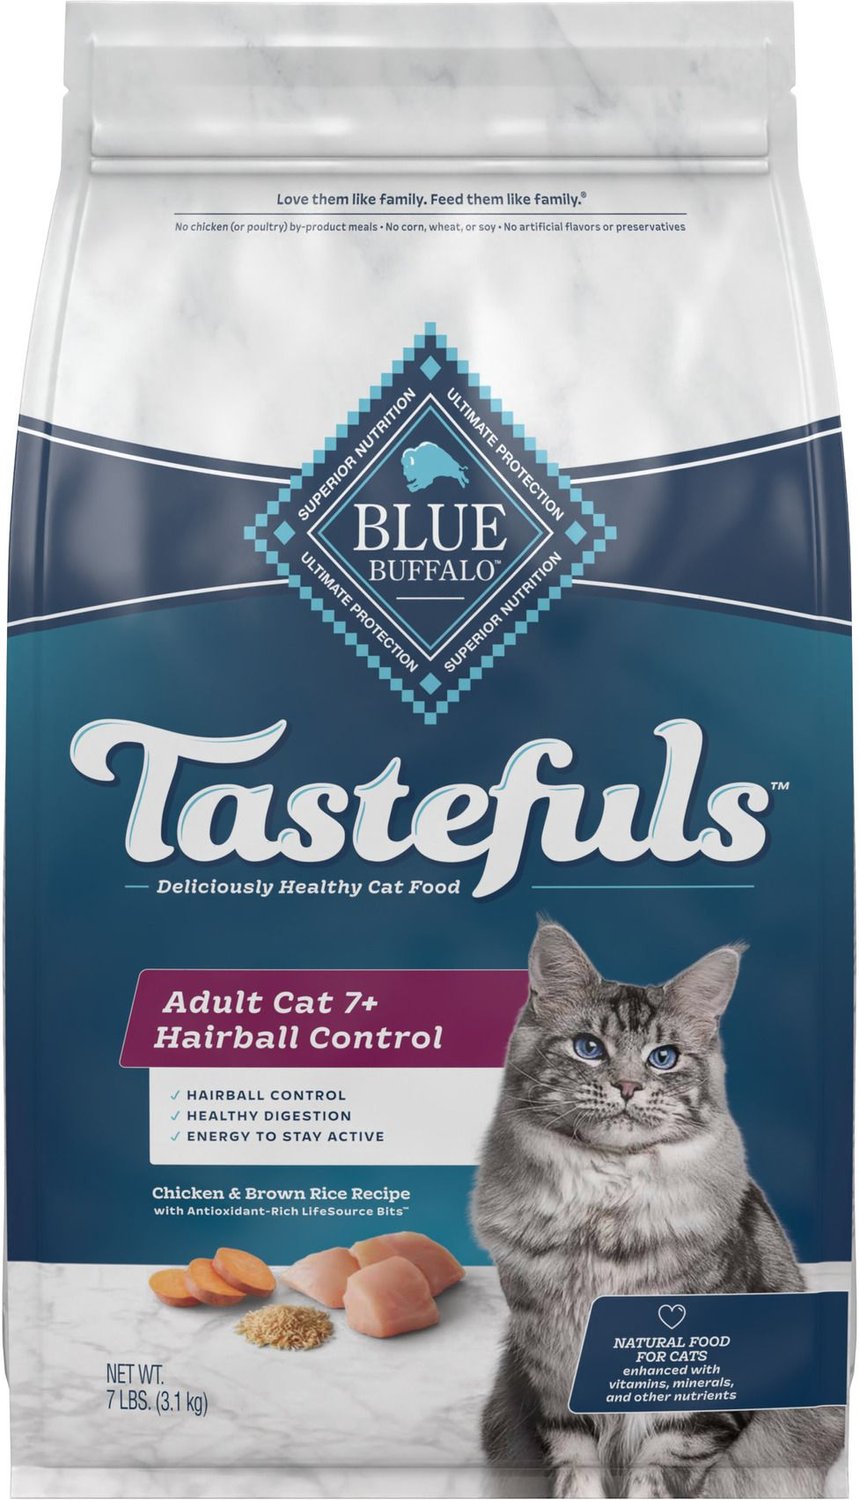 blue wilderness cat food